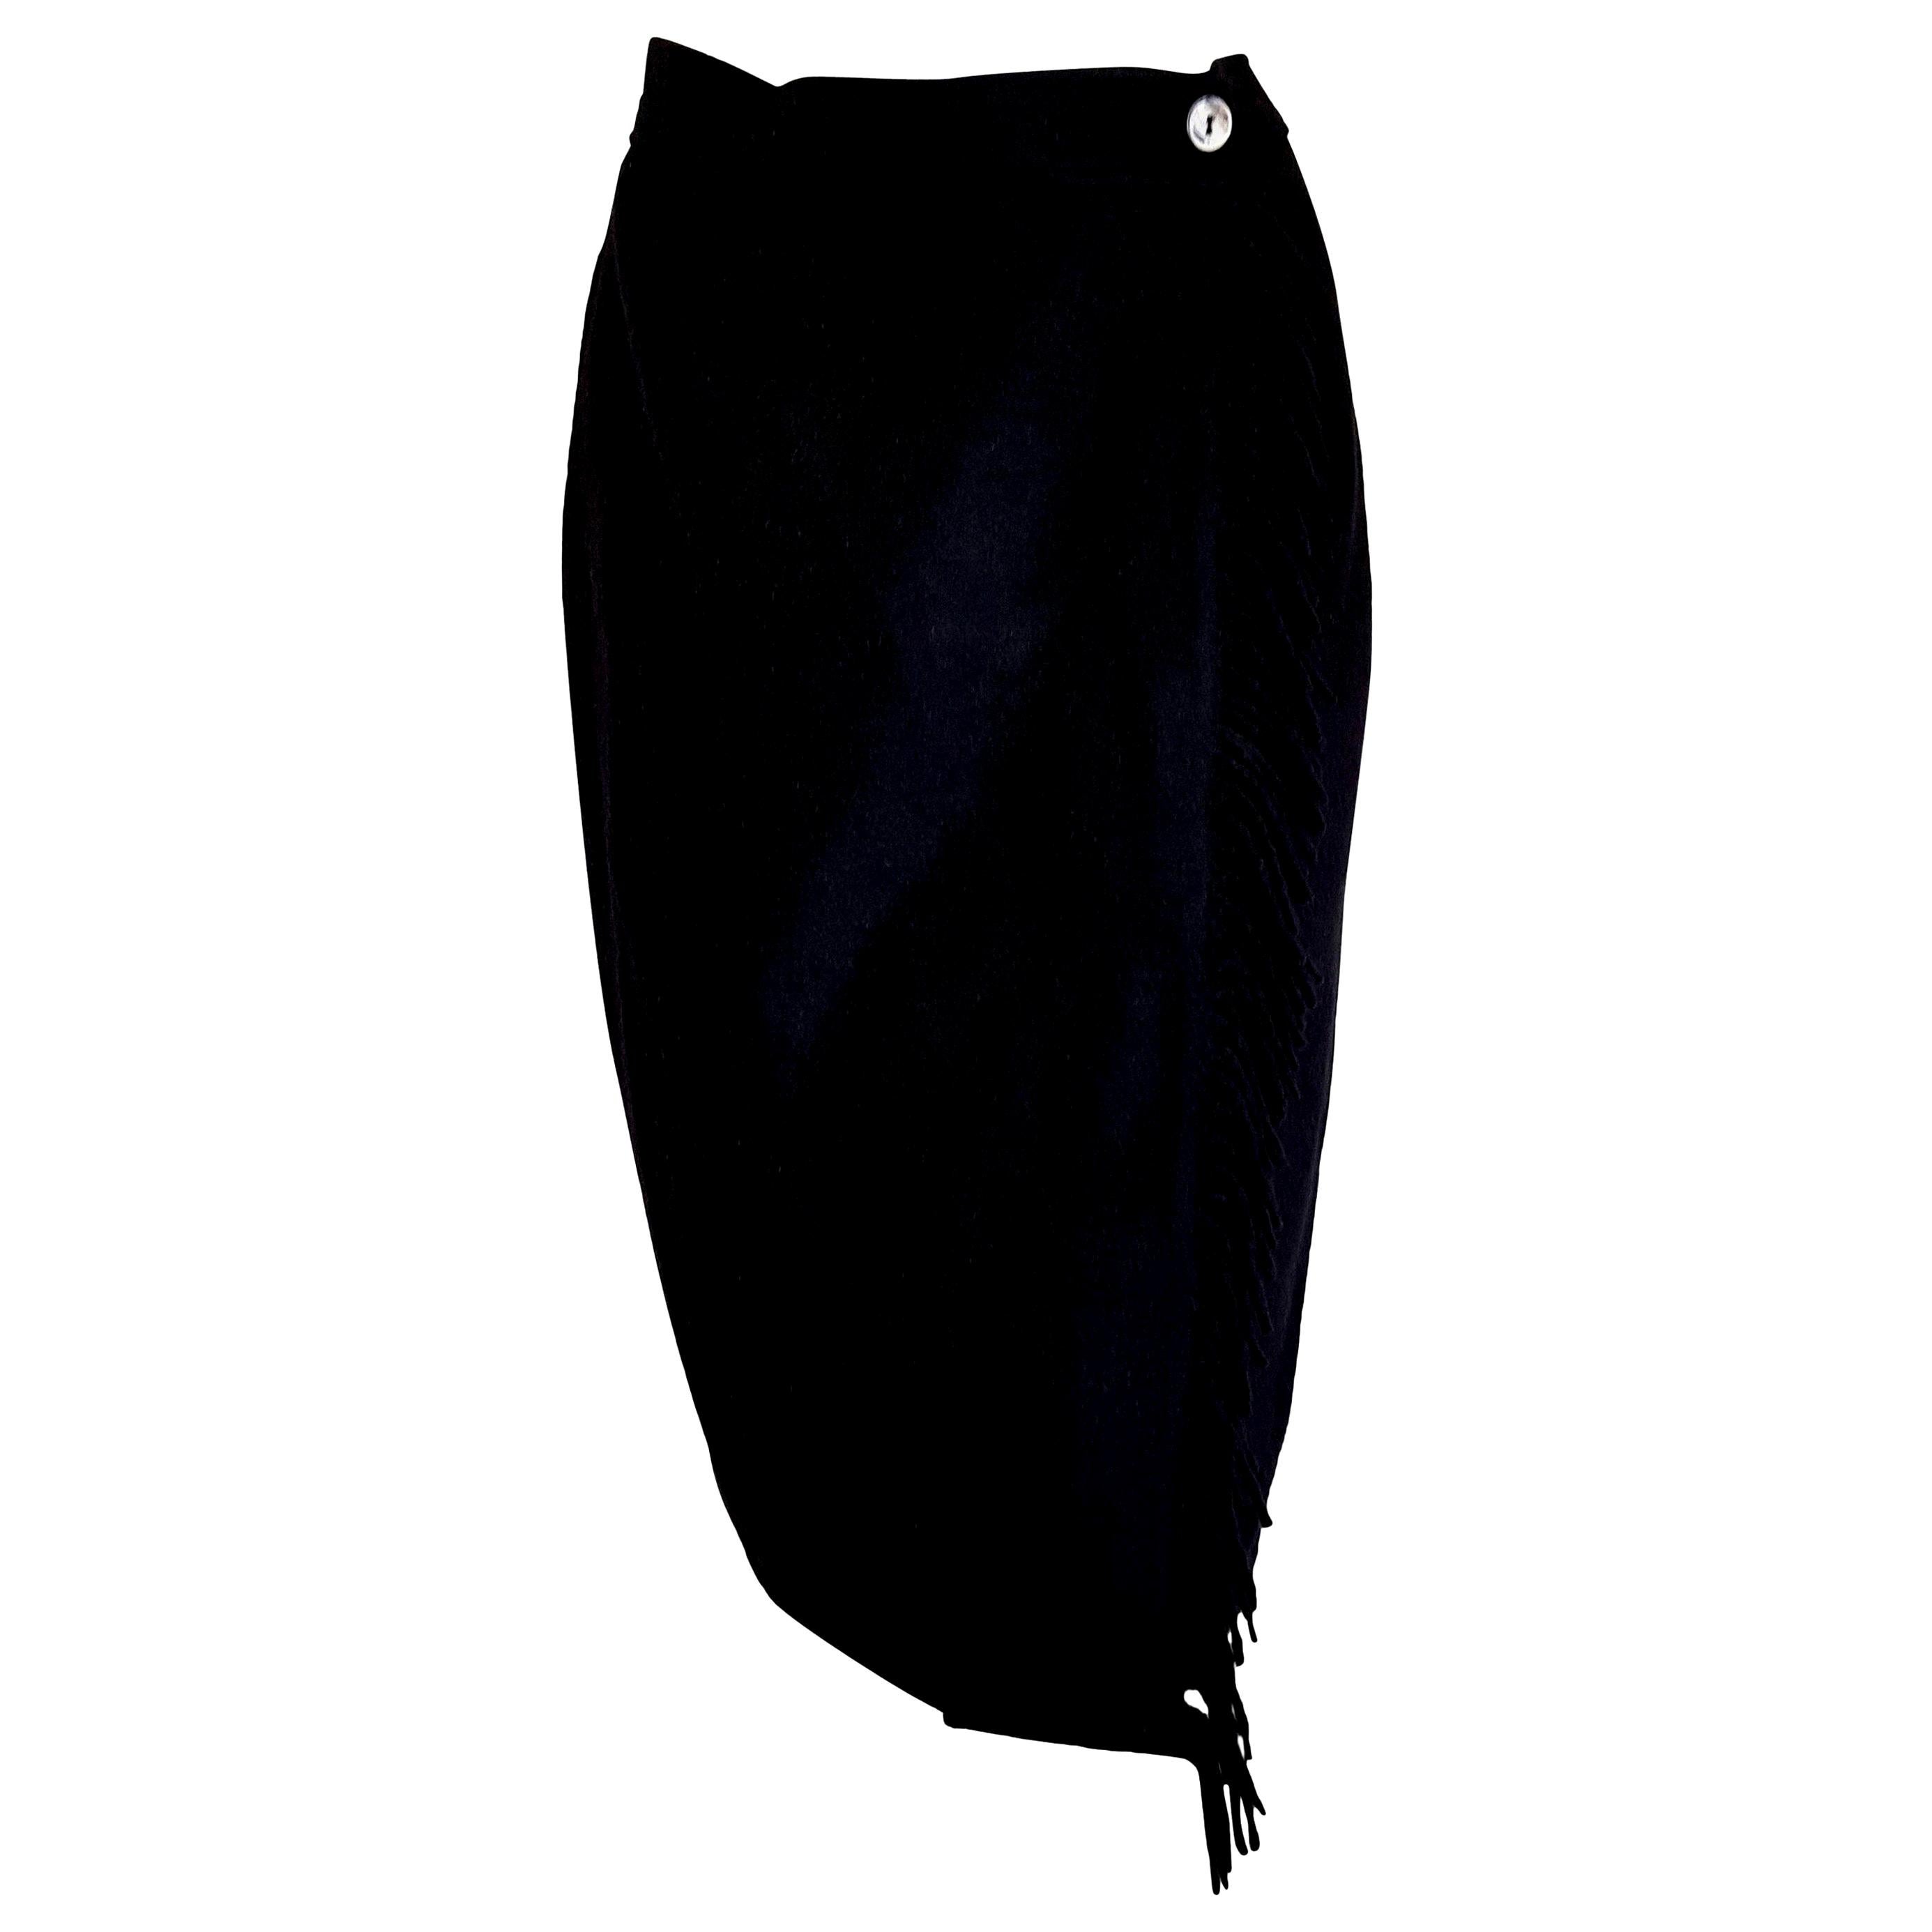 Laura BIAGIOTTI "New" Cashemere Black Skirt Fringes Vertical Opening - Unworn For Sale